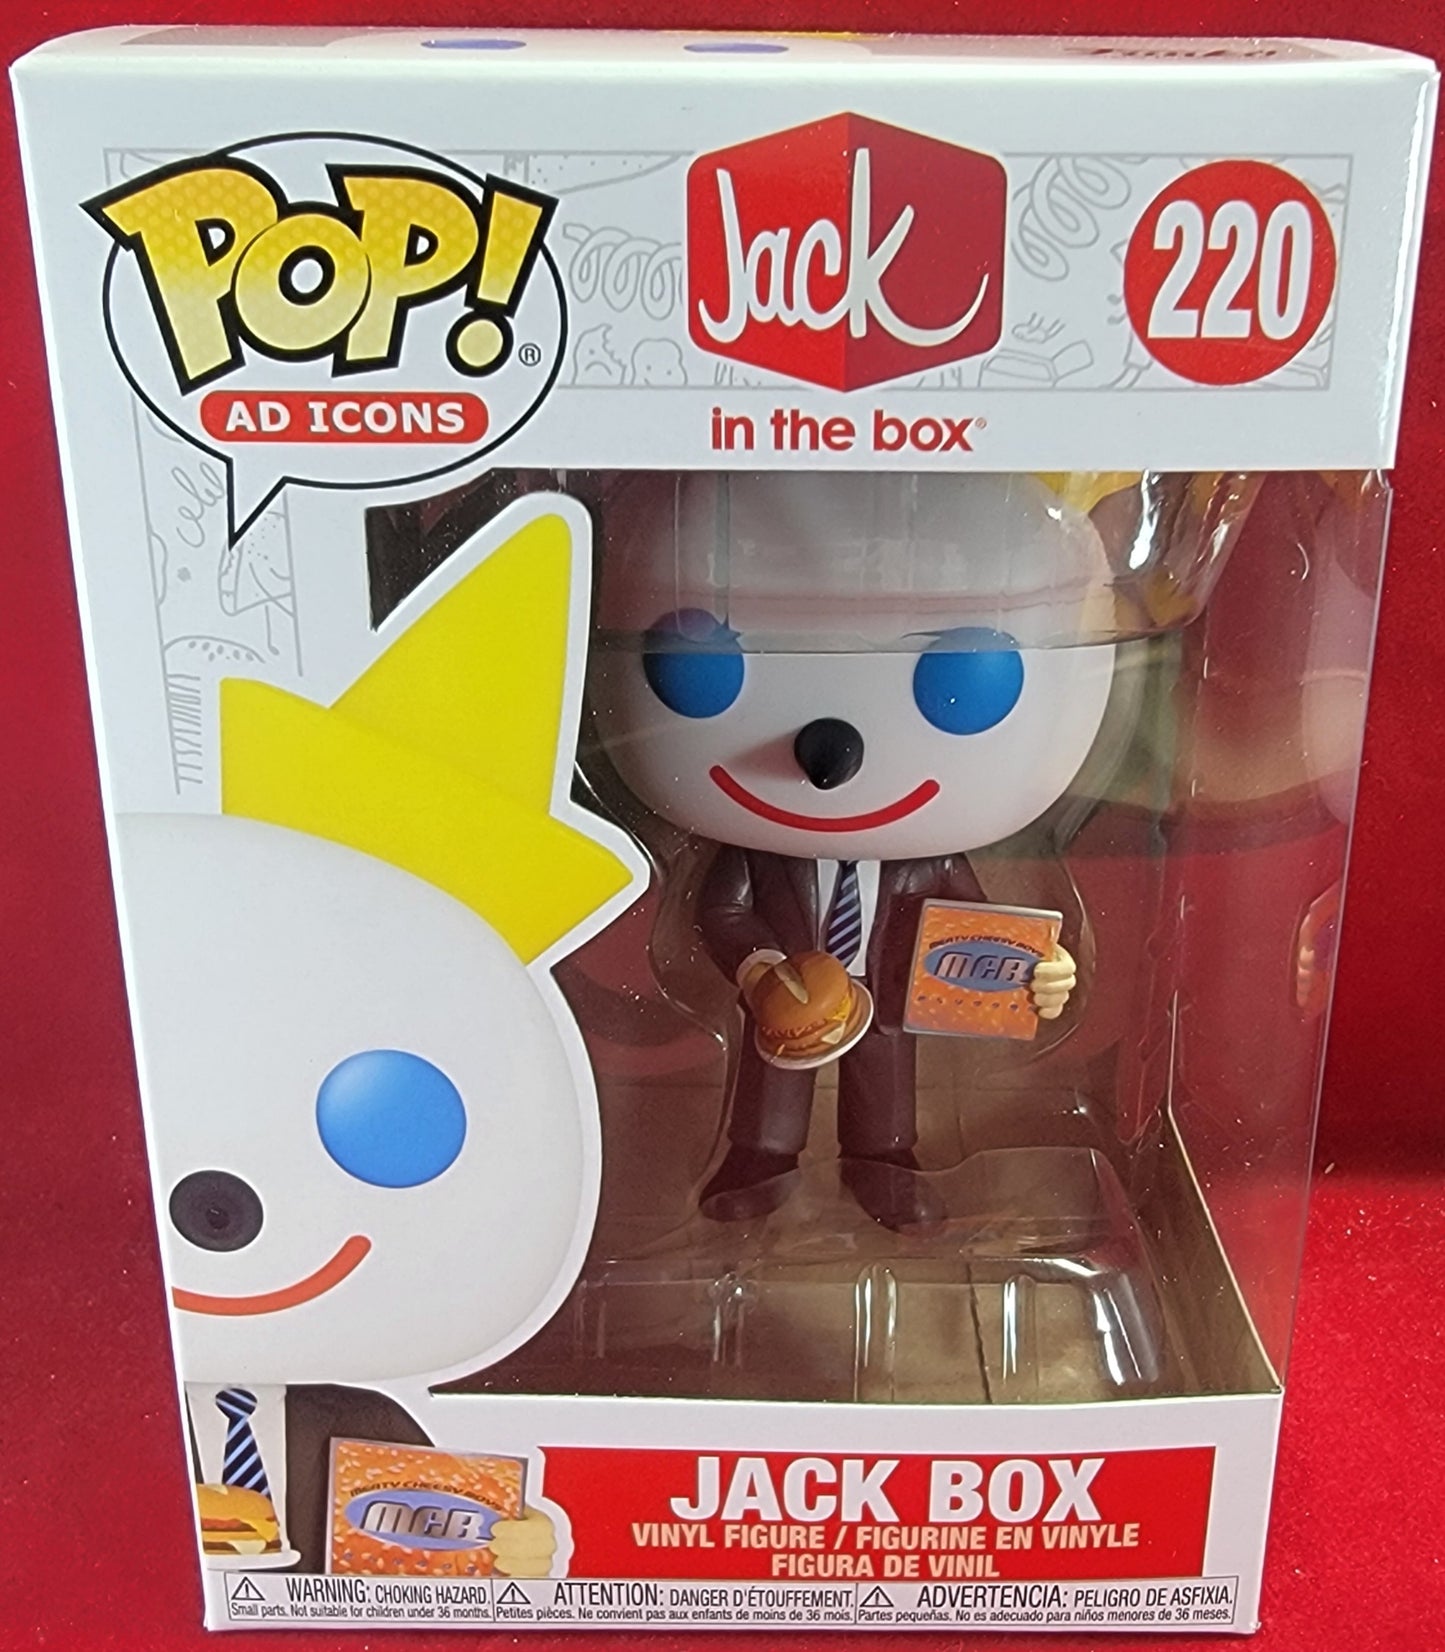 Jack box funko # 220 (nib)
With pop protector